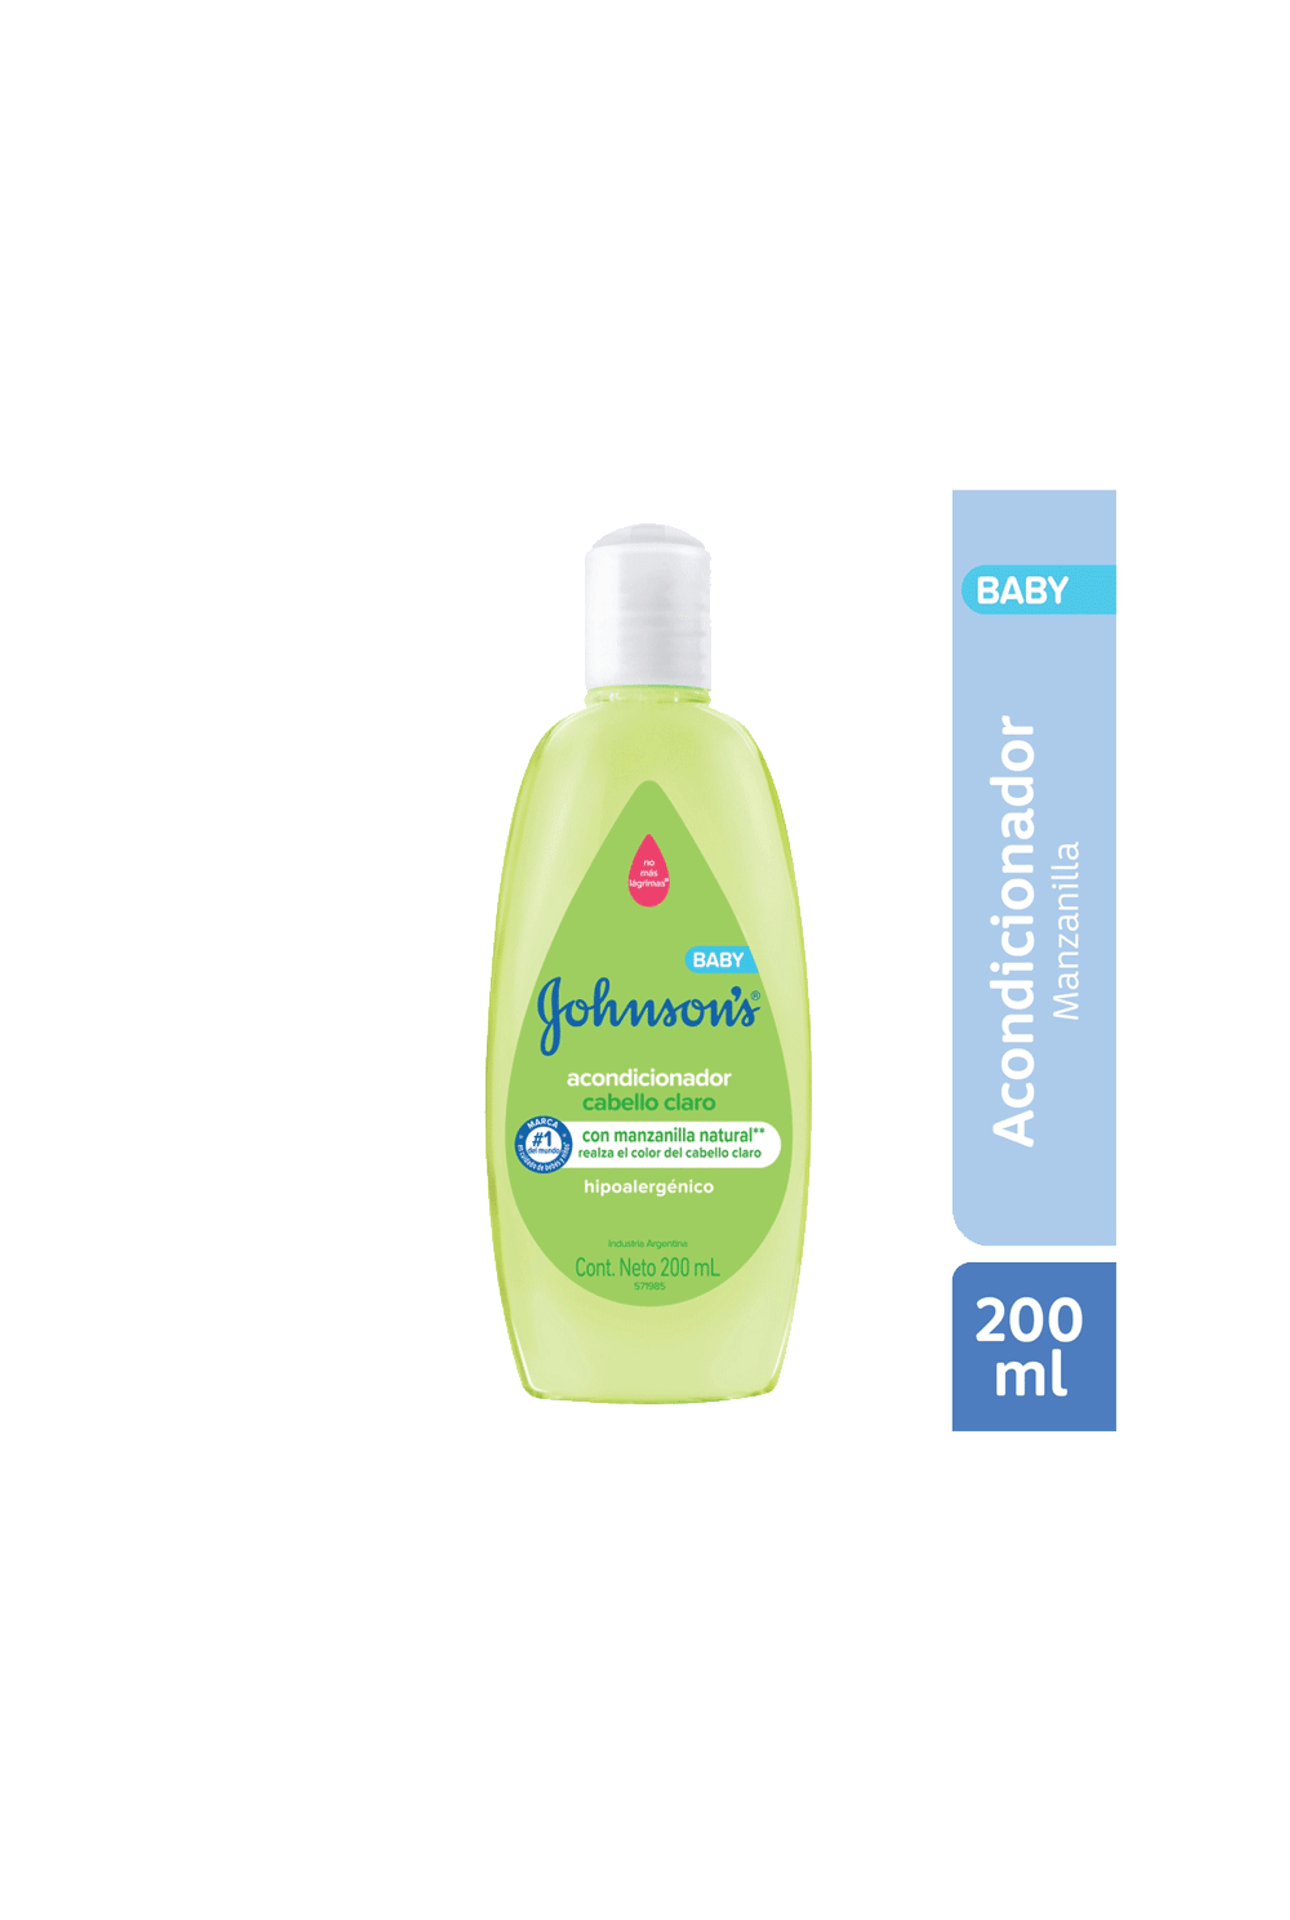 Shampoo Extracto De Manzanilla Natural 500ml Envió Gratis!